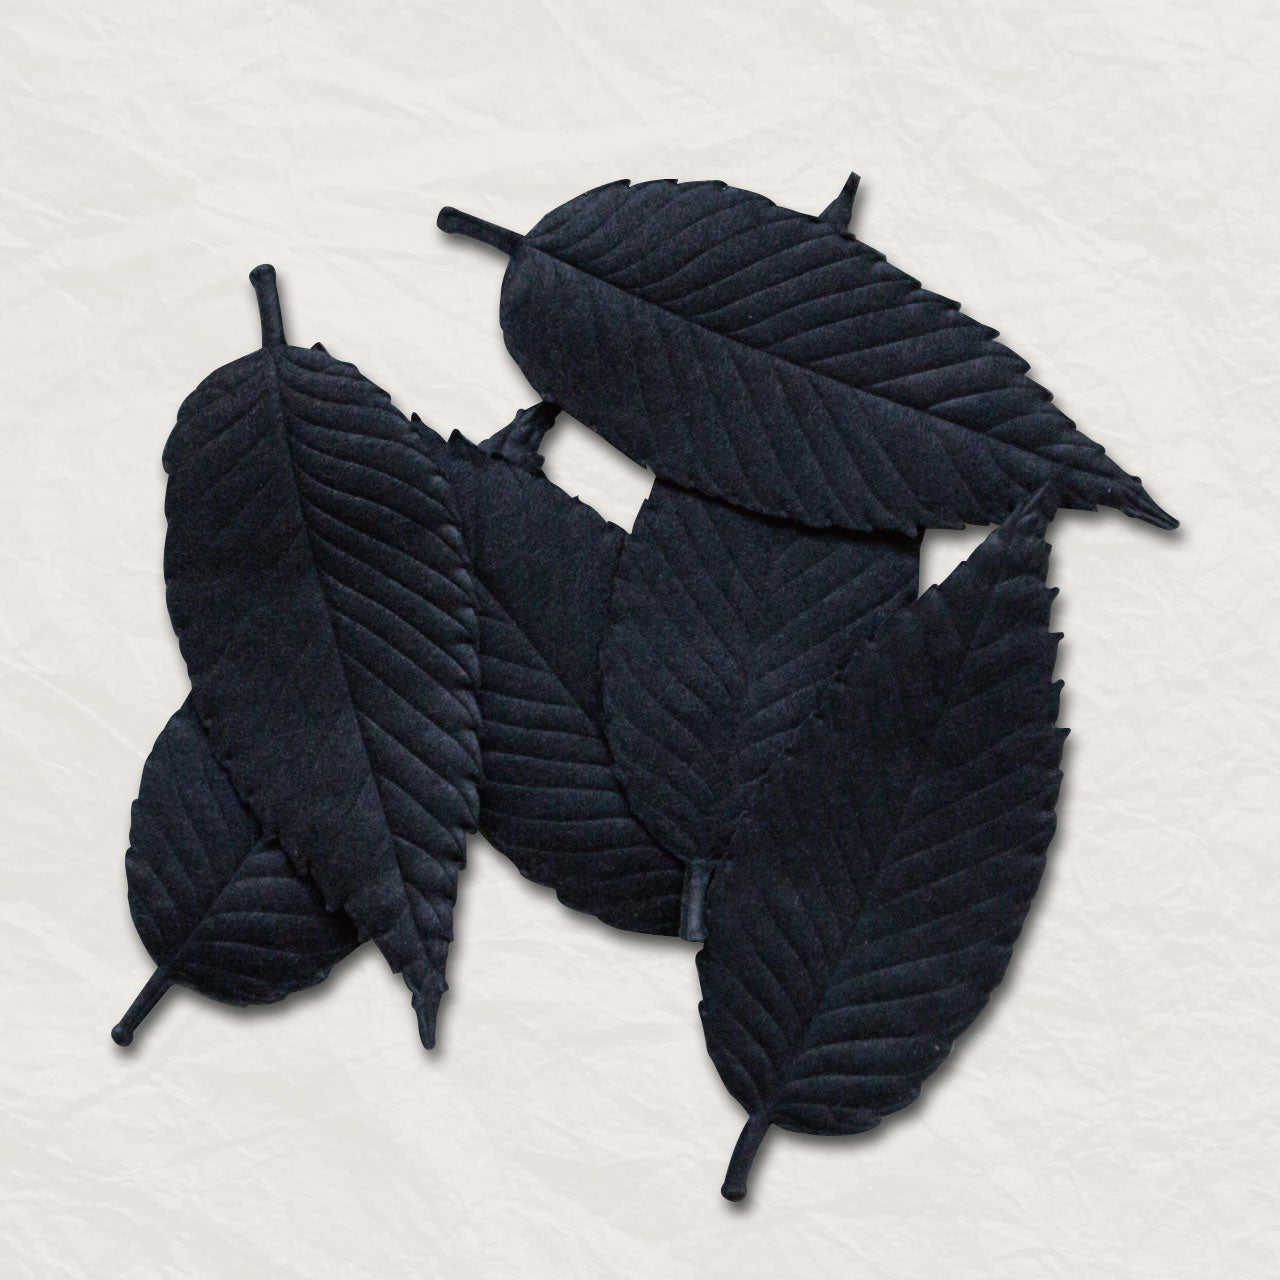 Black incense shaped like leaves